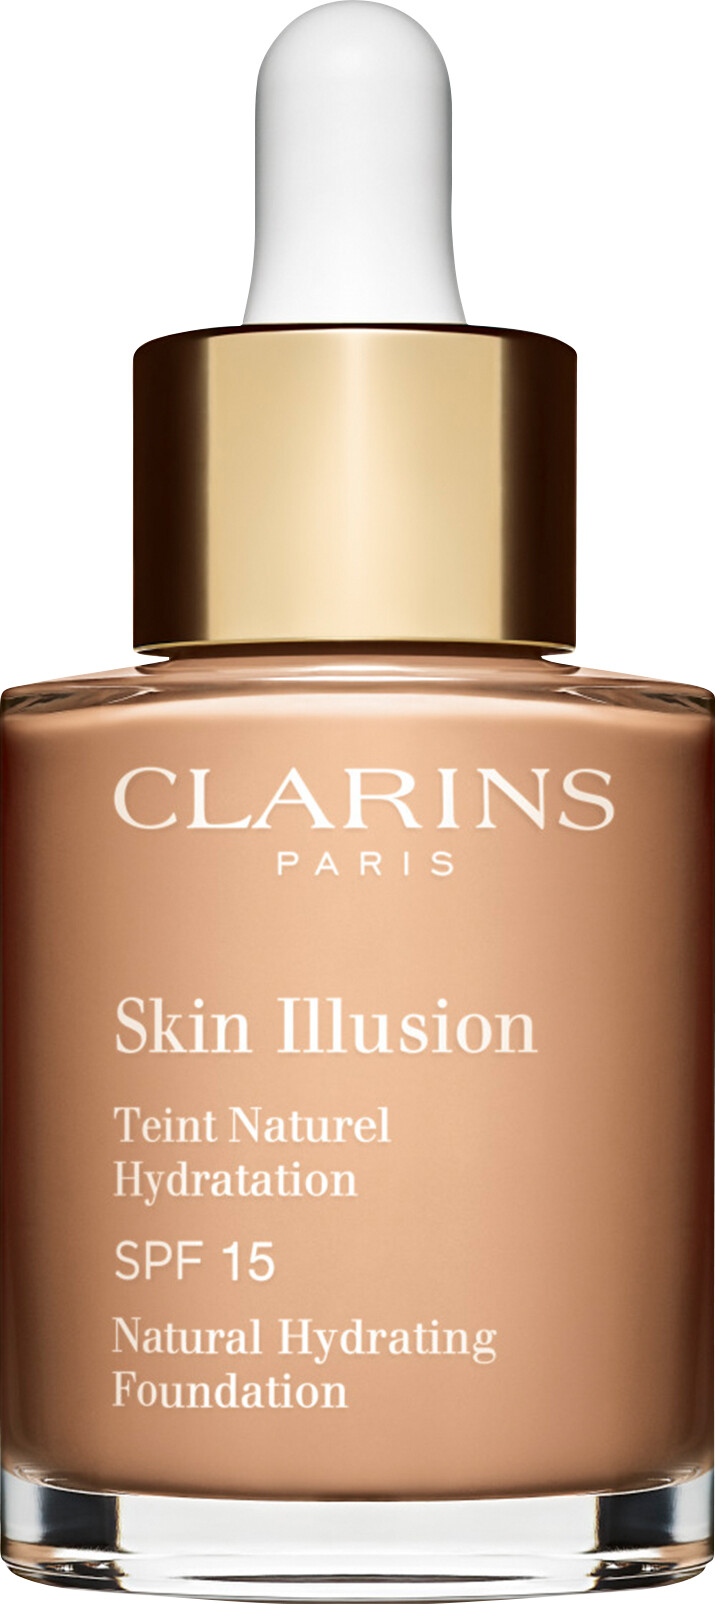 Clarins Skin Illusion Natural Hydrating Foundation SPF15 30ml 108 - Sand